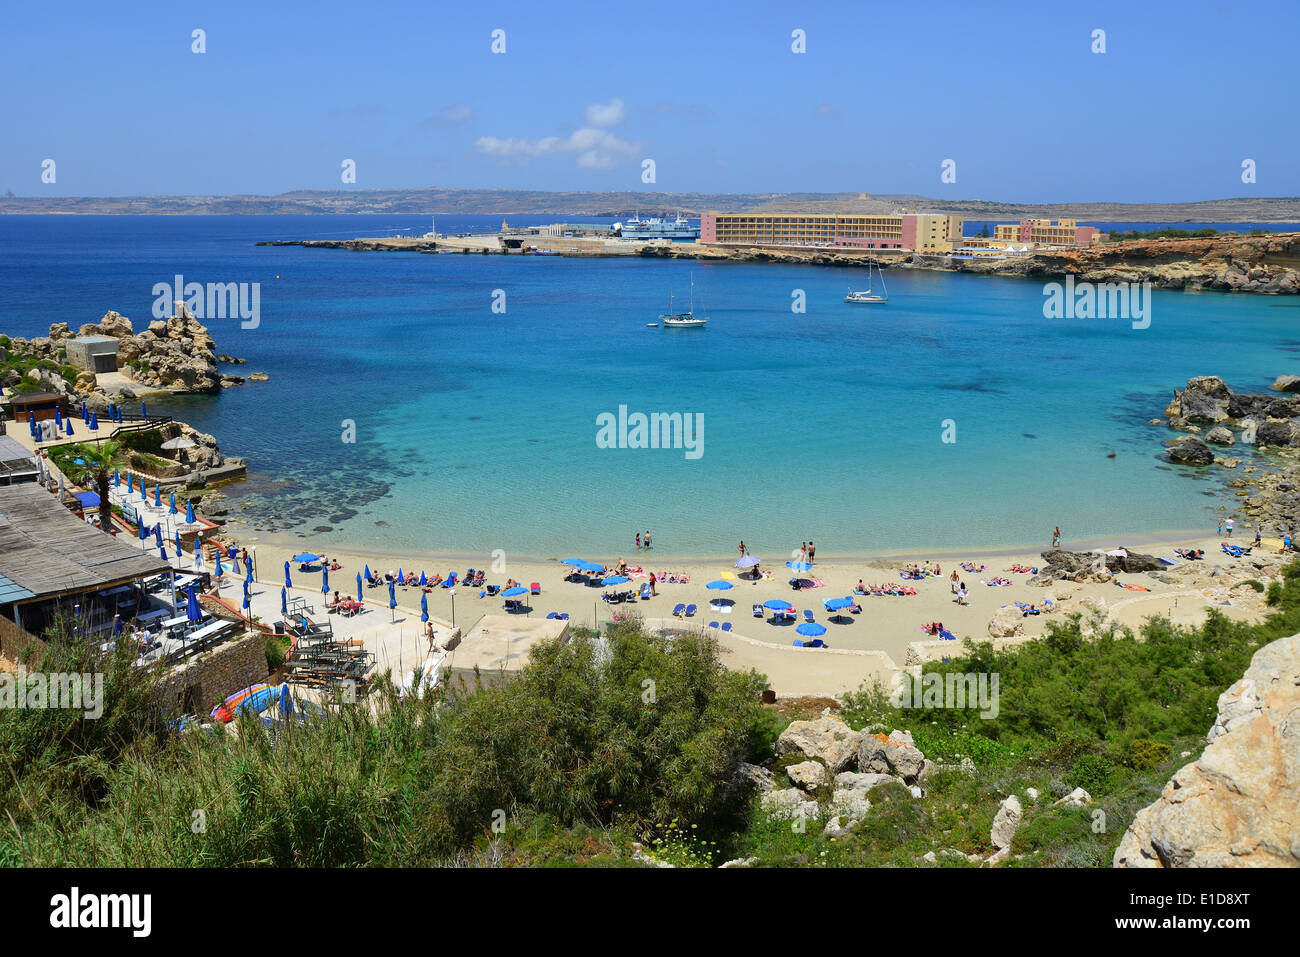 Beach view, Paradise Bay, Northern District, Malta Majjistral Region, Republic of Malta Stock Photo